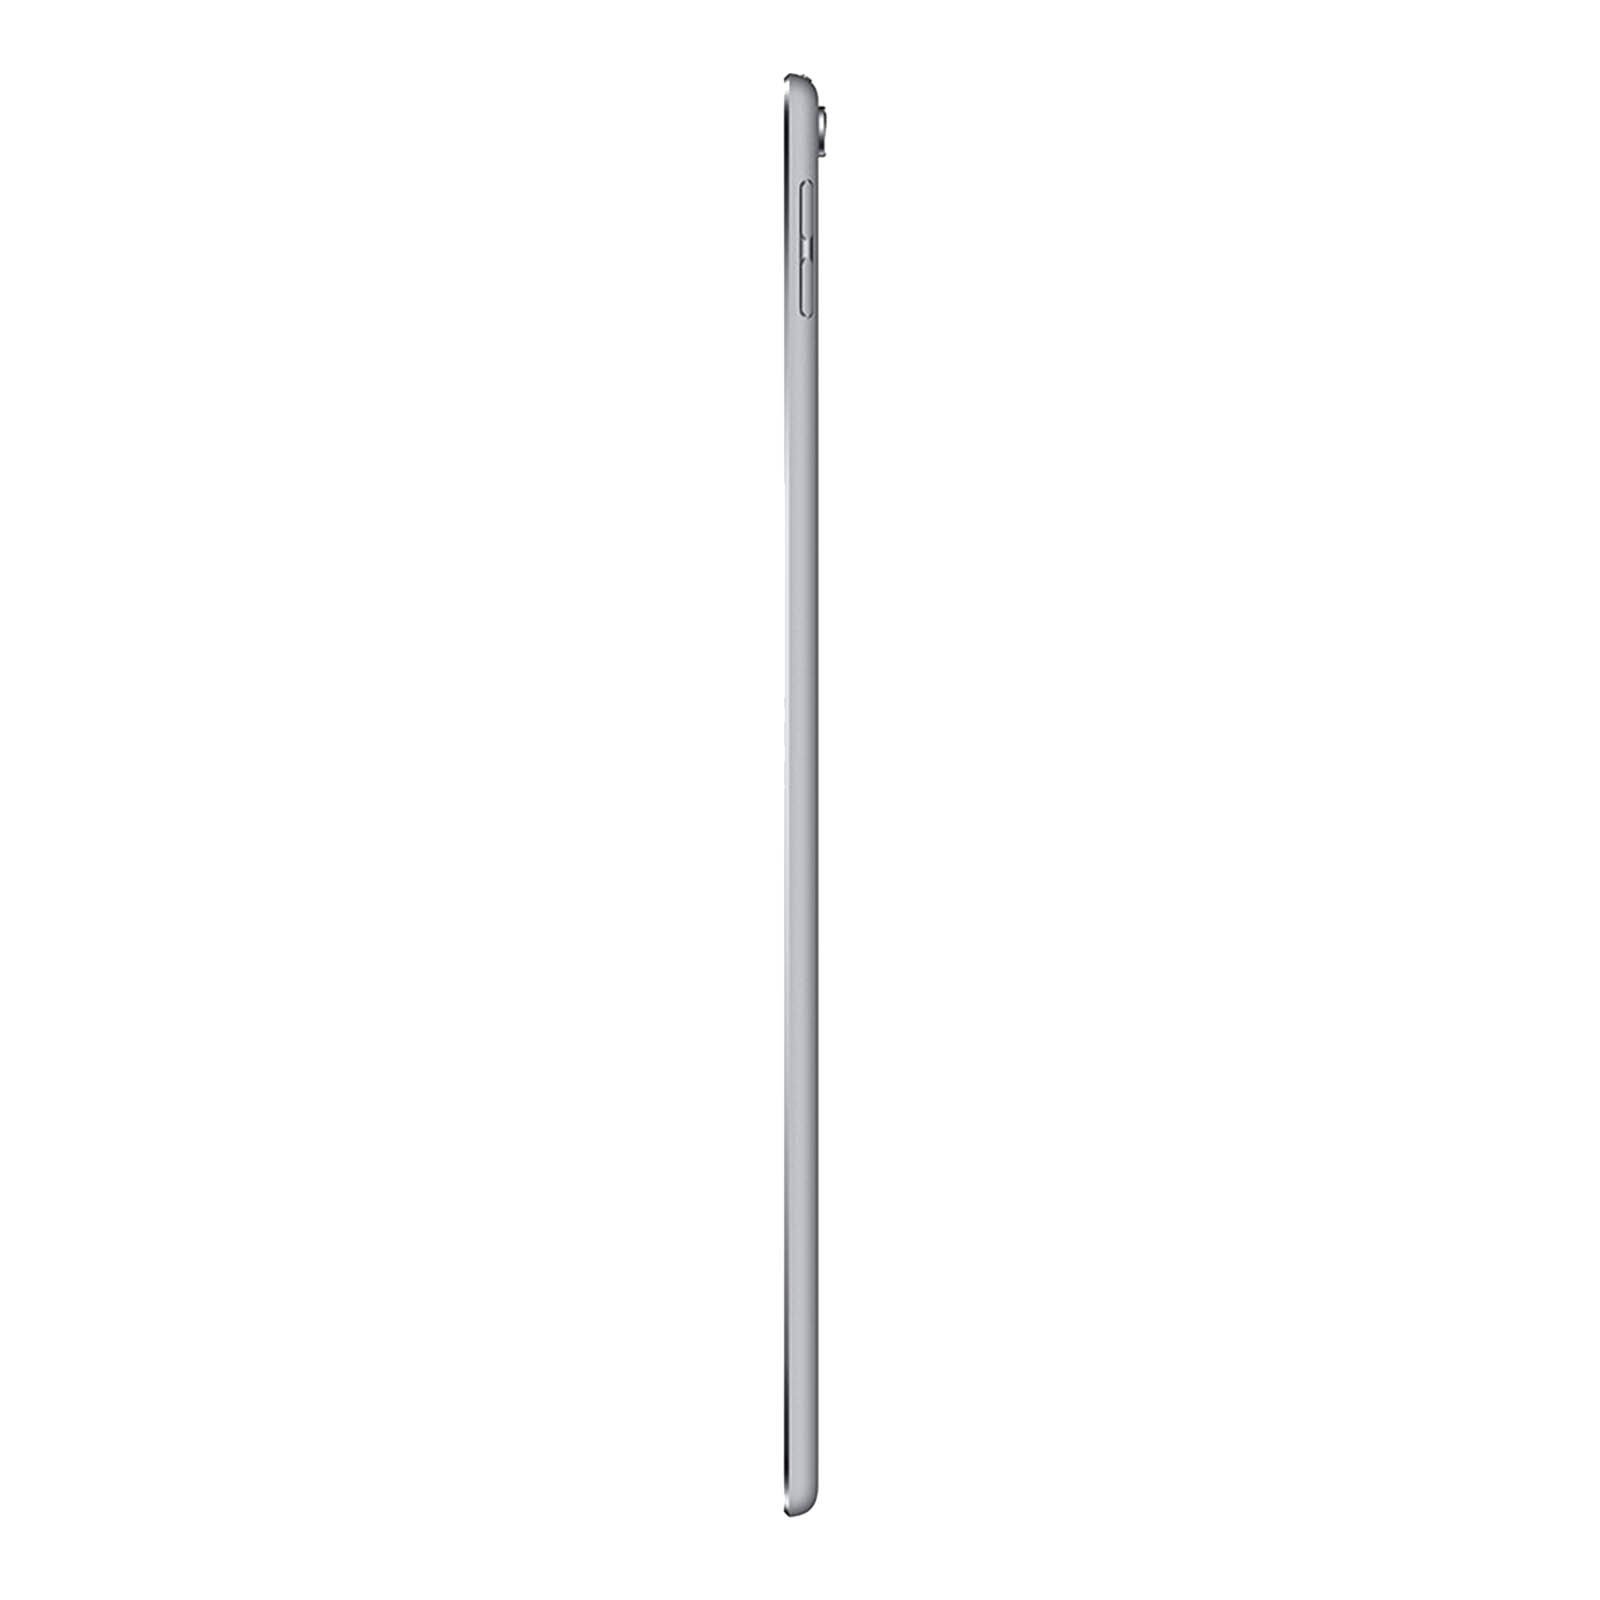 iPad Pro 10.5 Inch 512GB Space Grey Very Good - Unlocked